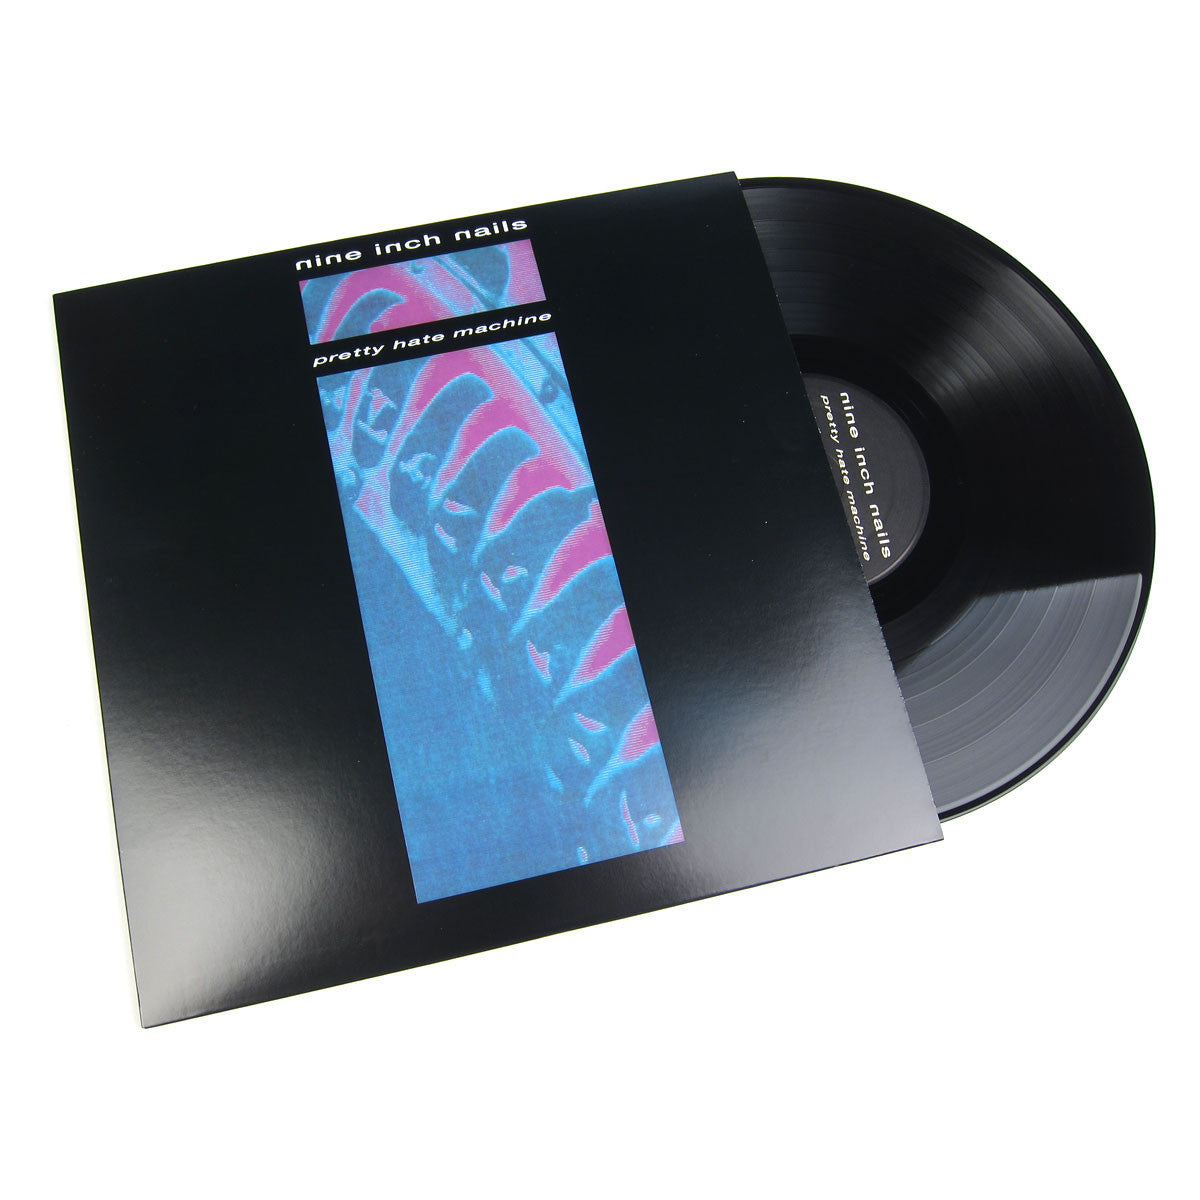 Papua Ny Guinea Envision Behandling Nine Inch Nails: Pretty Hate Machine Vinyl LP — TurntableLab.com